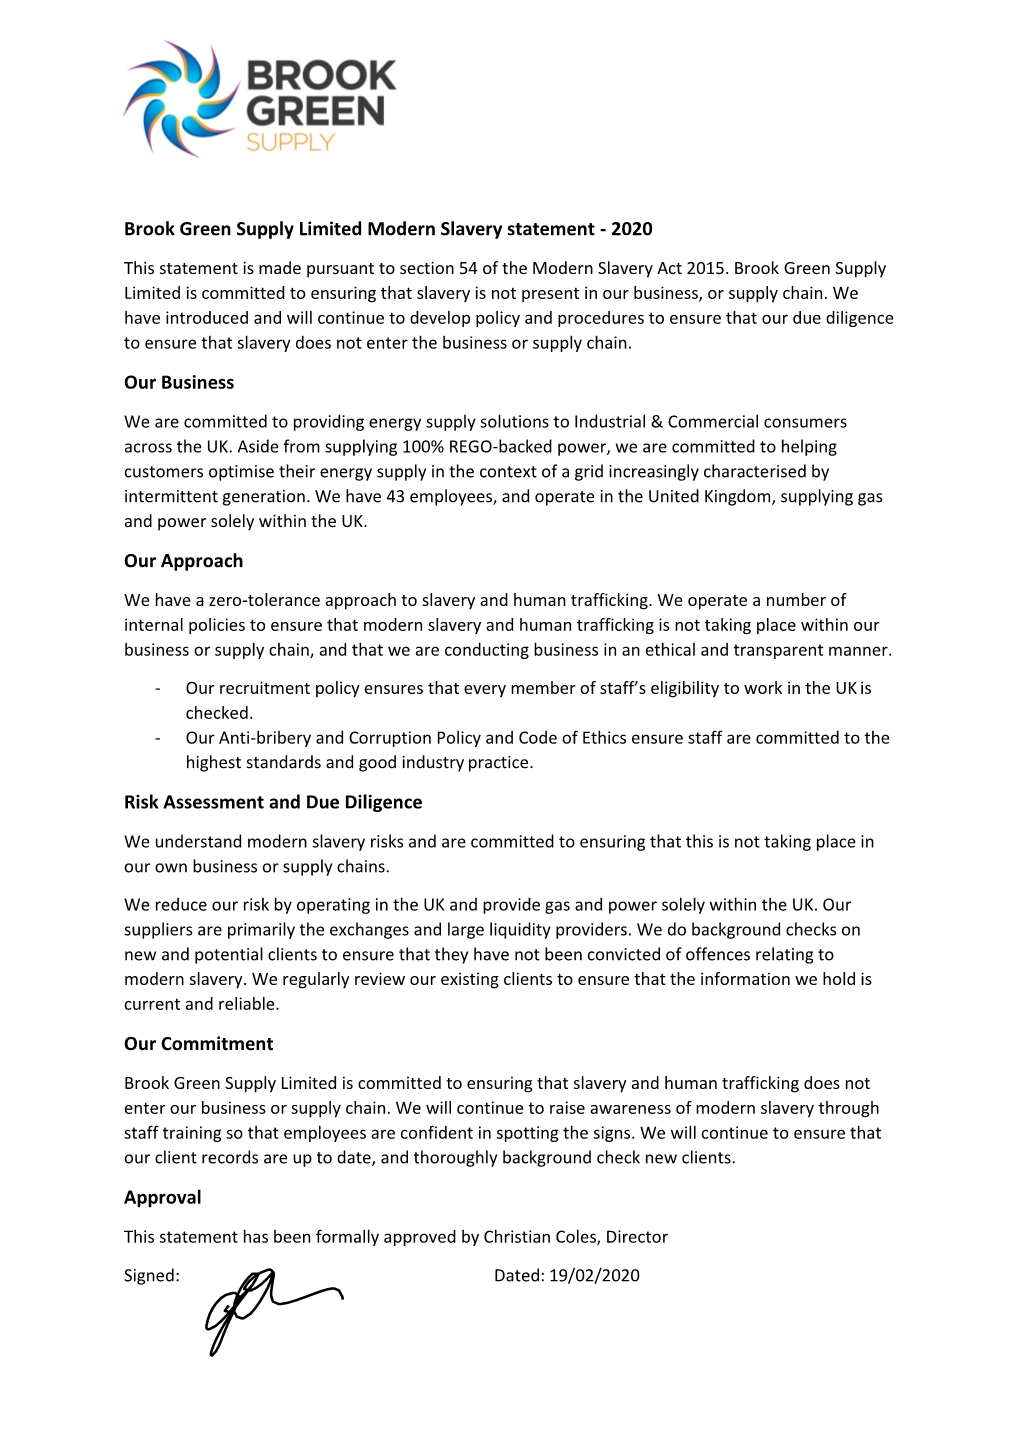 Brook Green Supply Limited Modern Slavery Statement - 2020